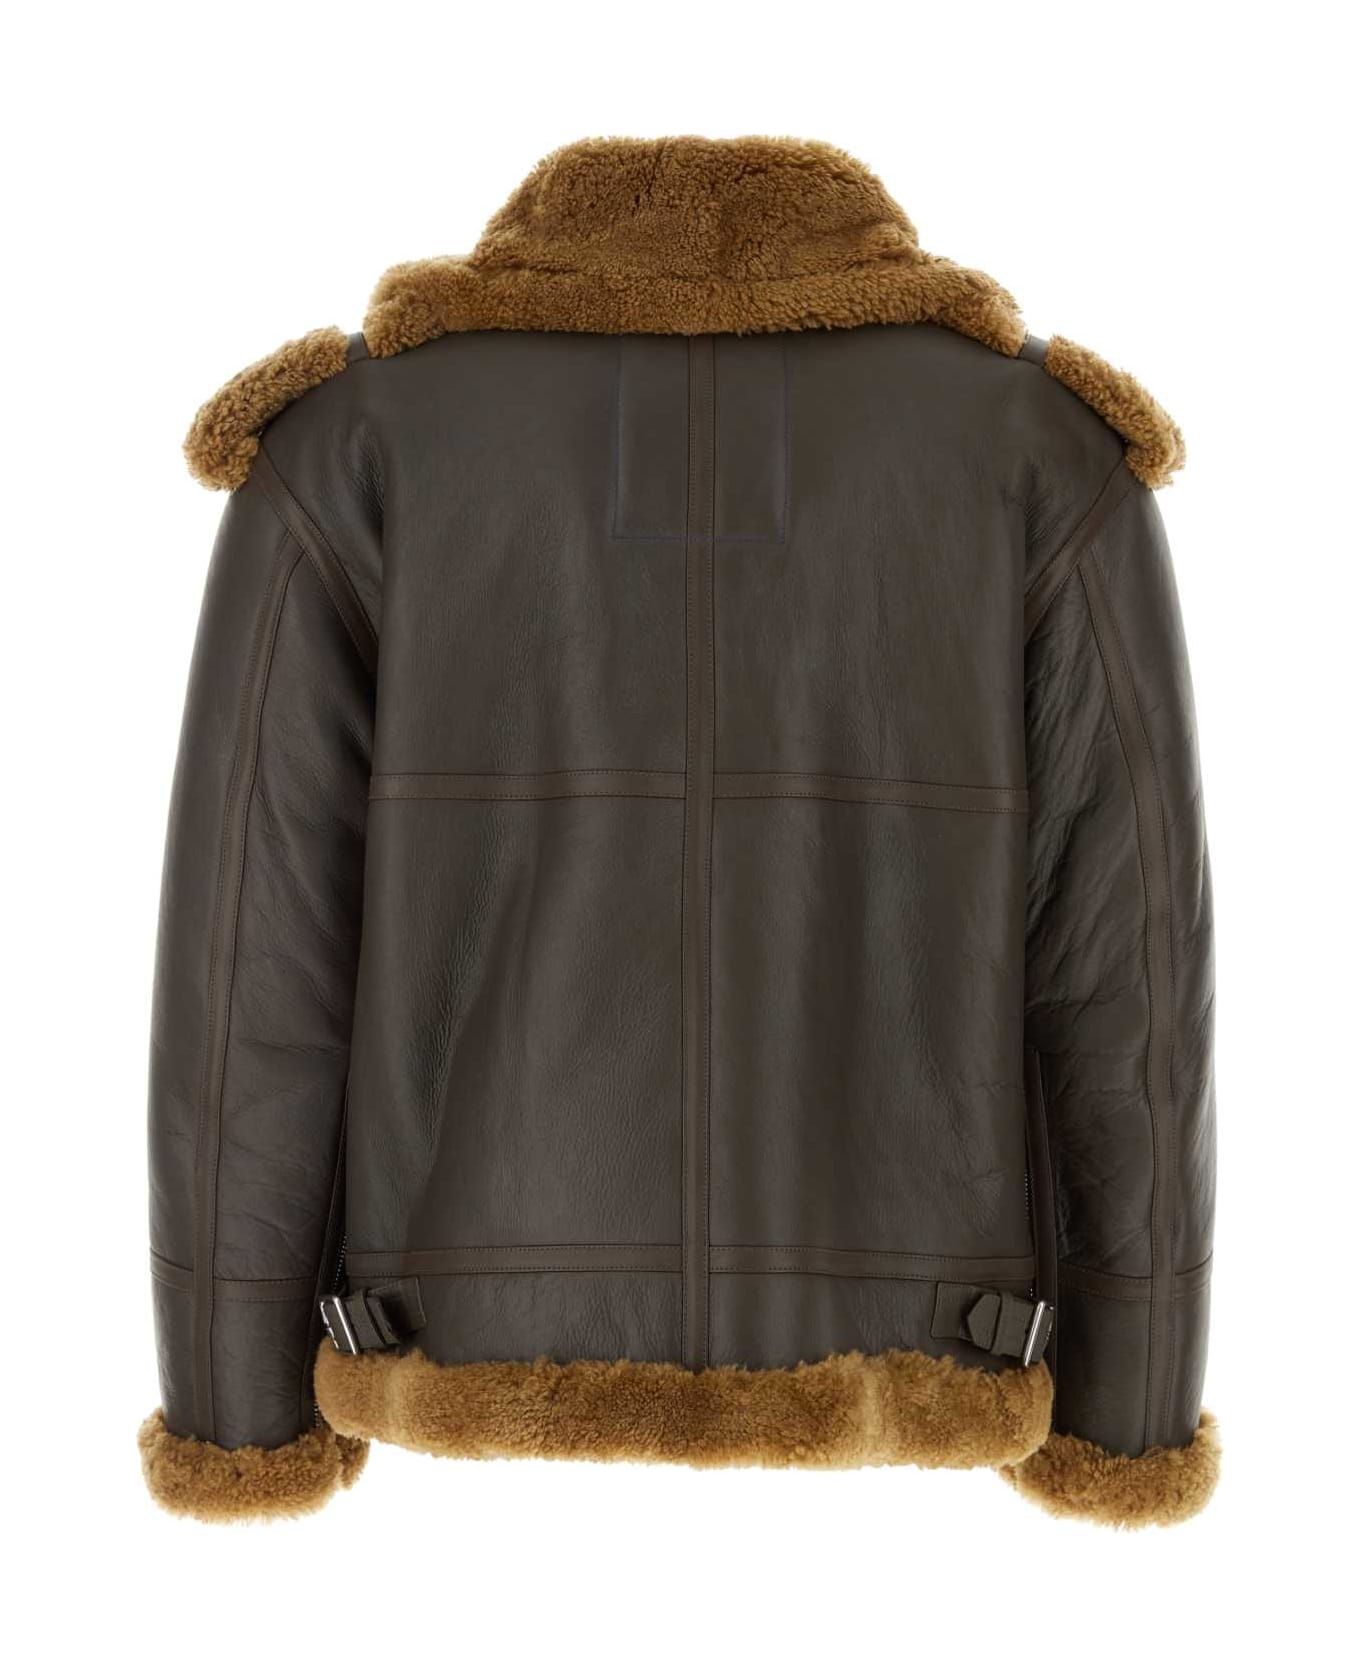 Burberry Dark Brown Leather Jacket - OTTER レザージャケット